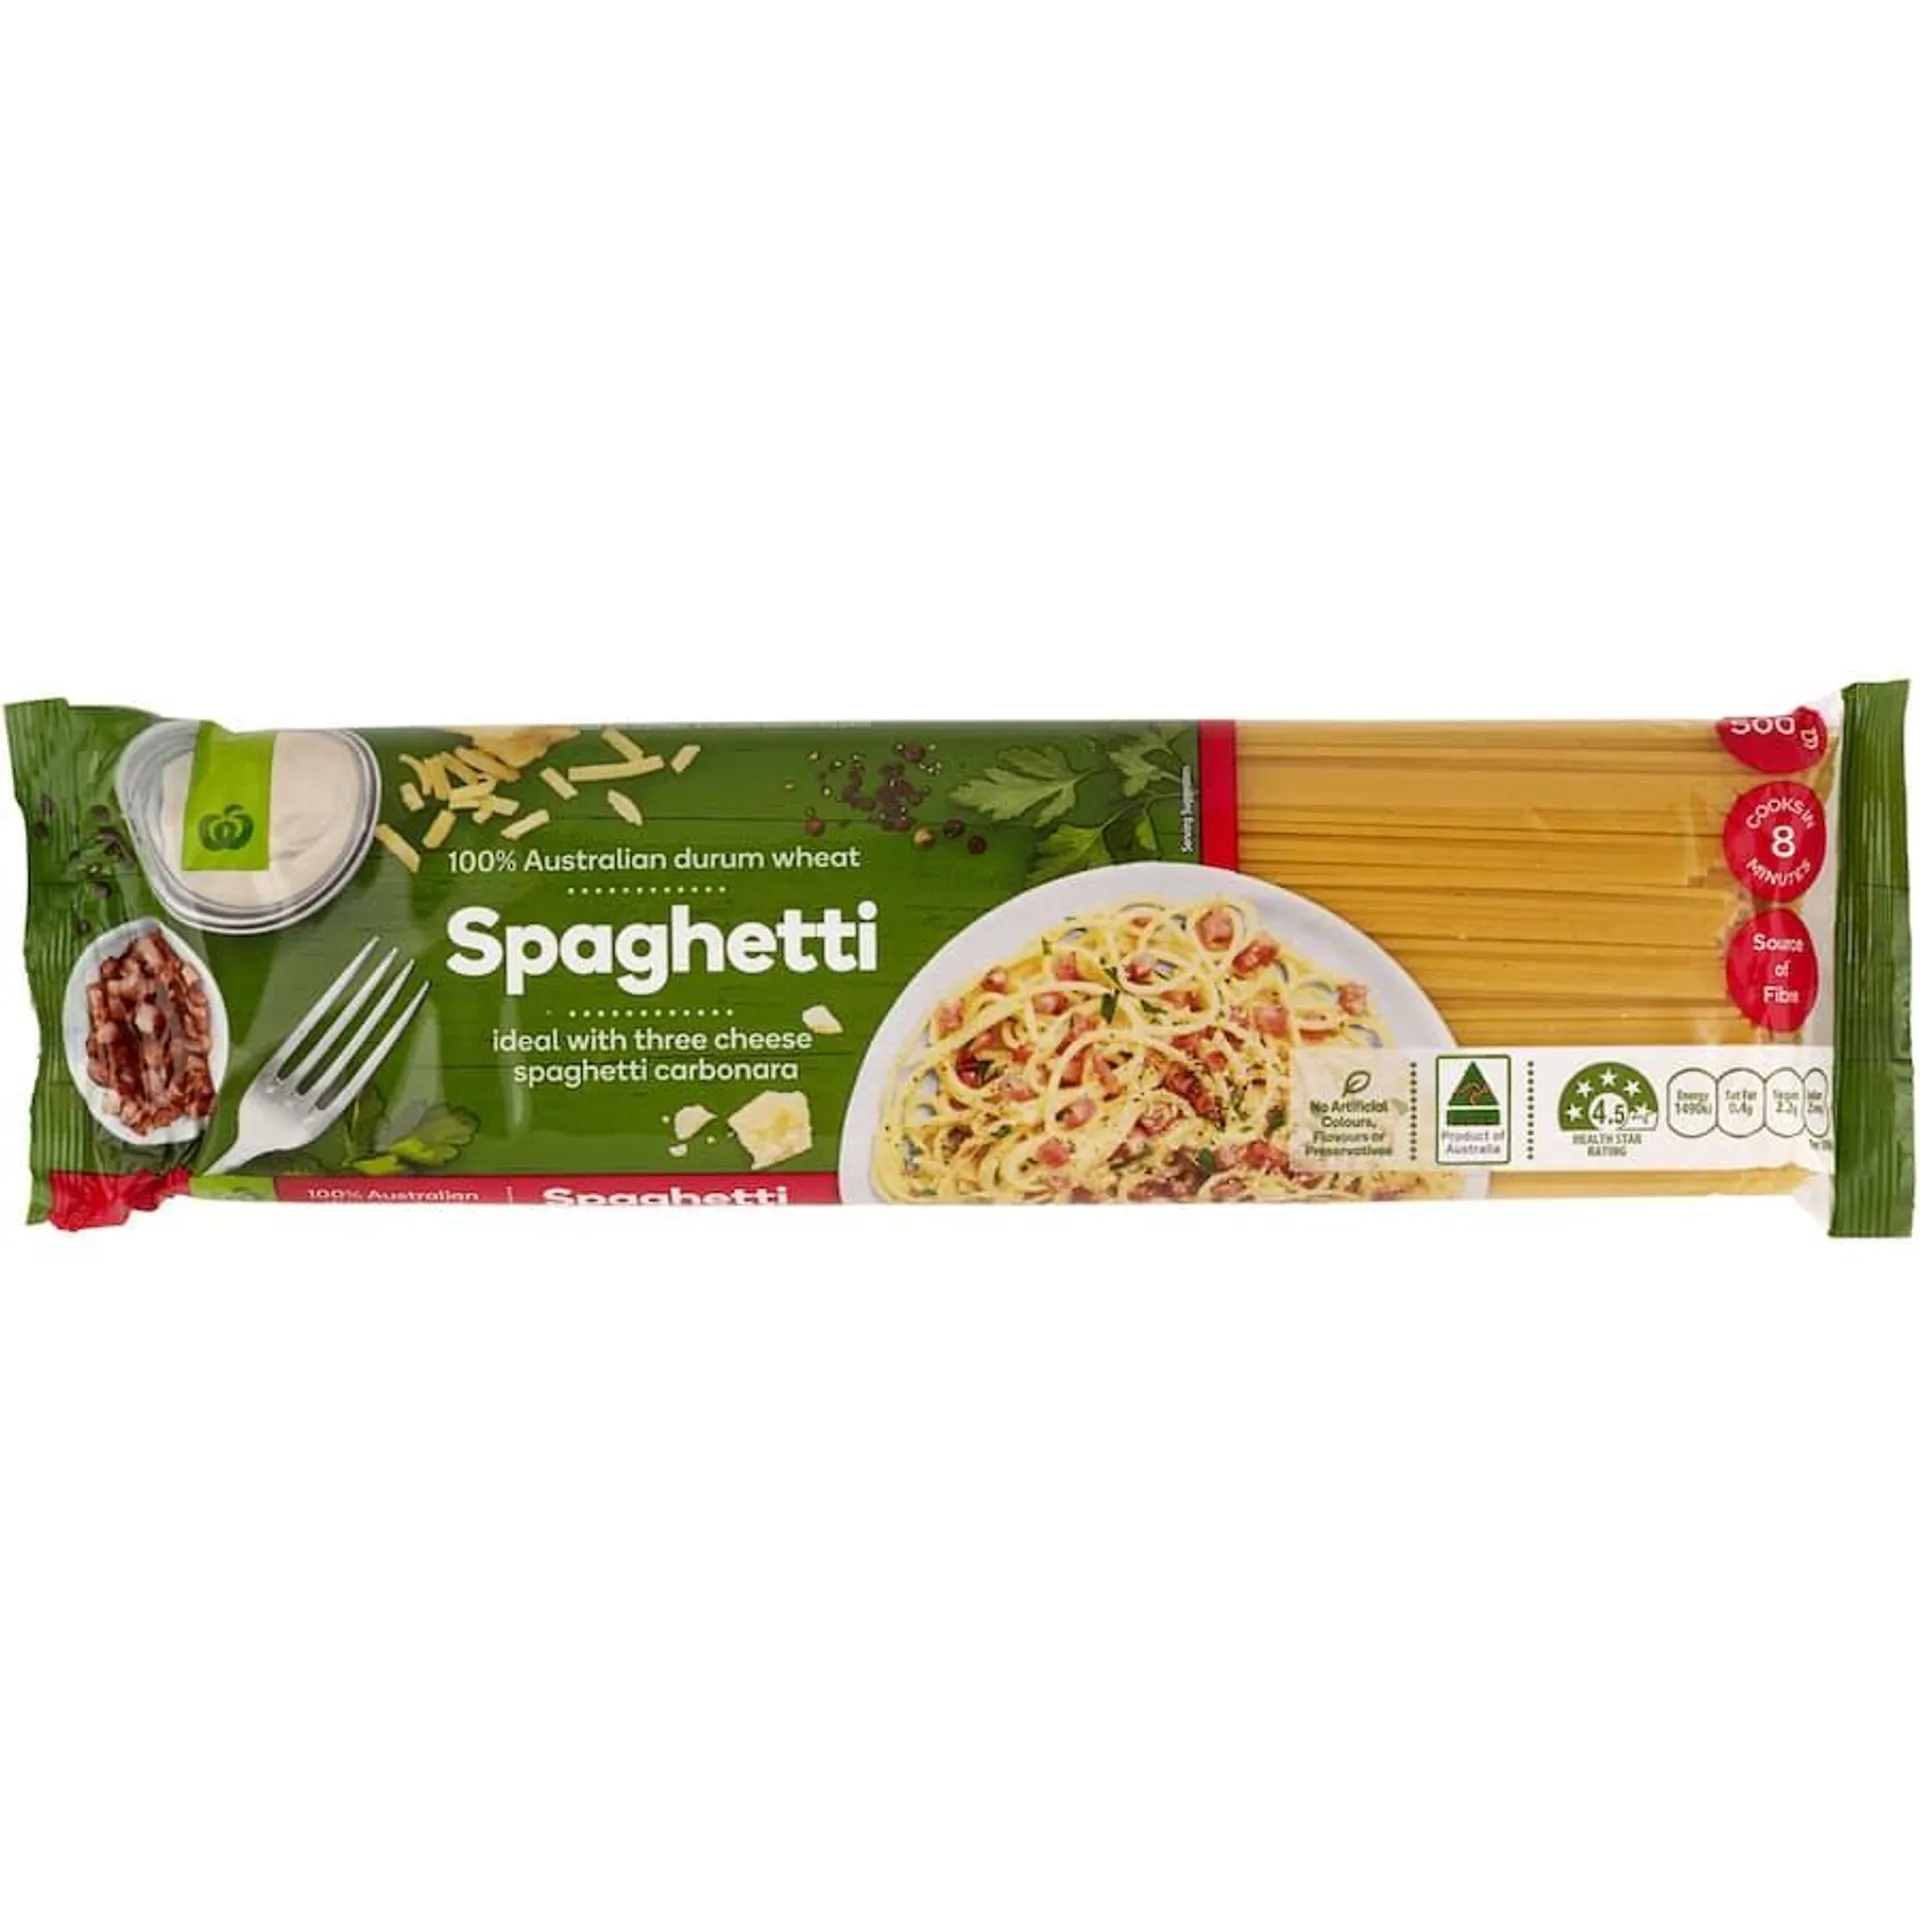 Woolworths Pasta Spaghetti